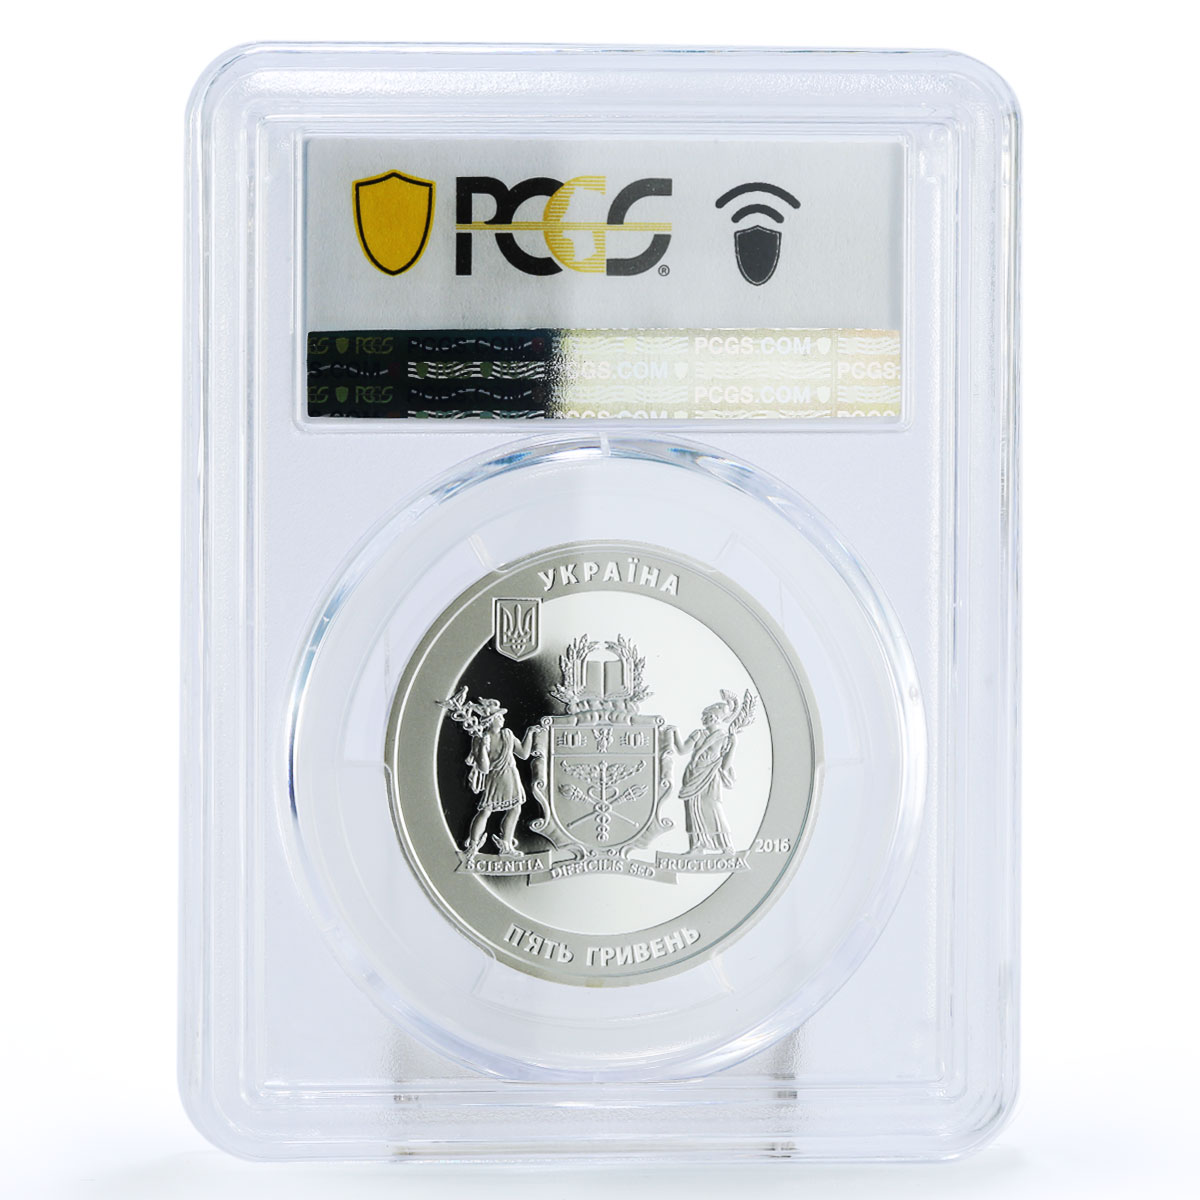 Ukraine 5 hryvnias Kyiv University of Trade Economics PR69 PCGS silver coin 2016